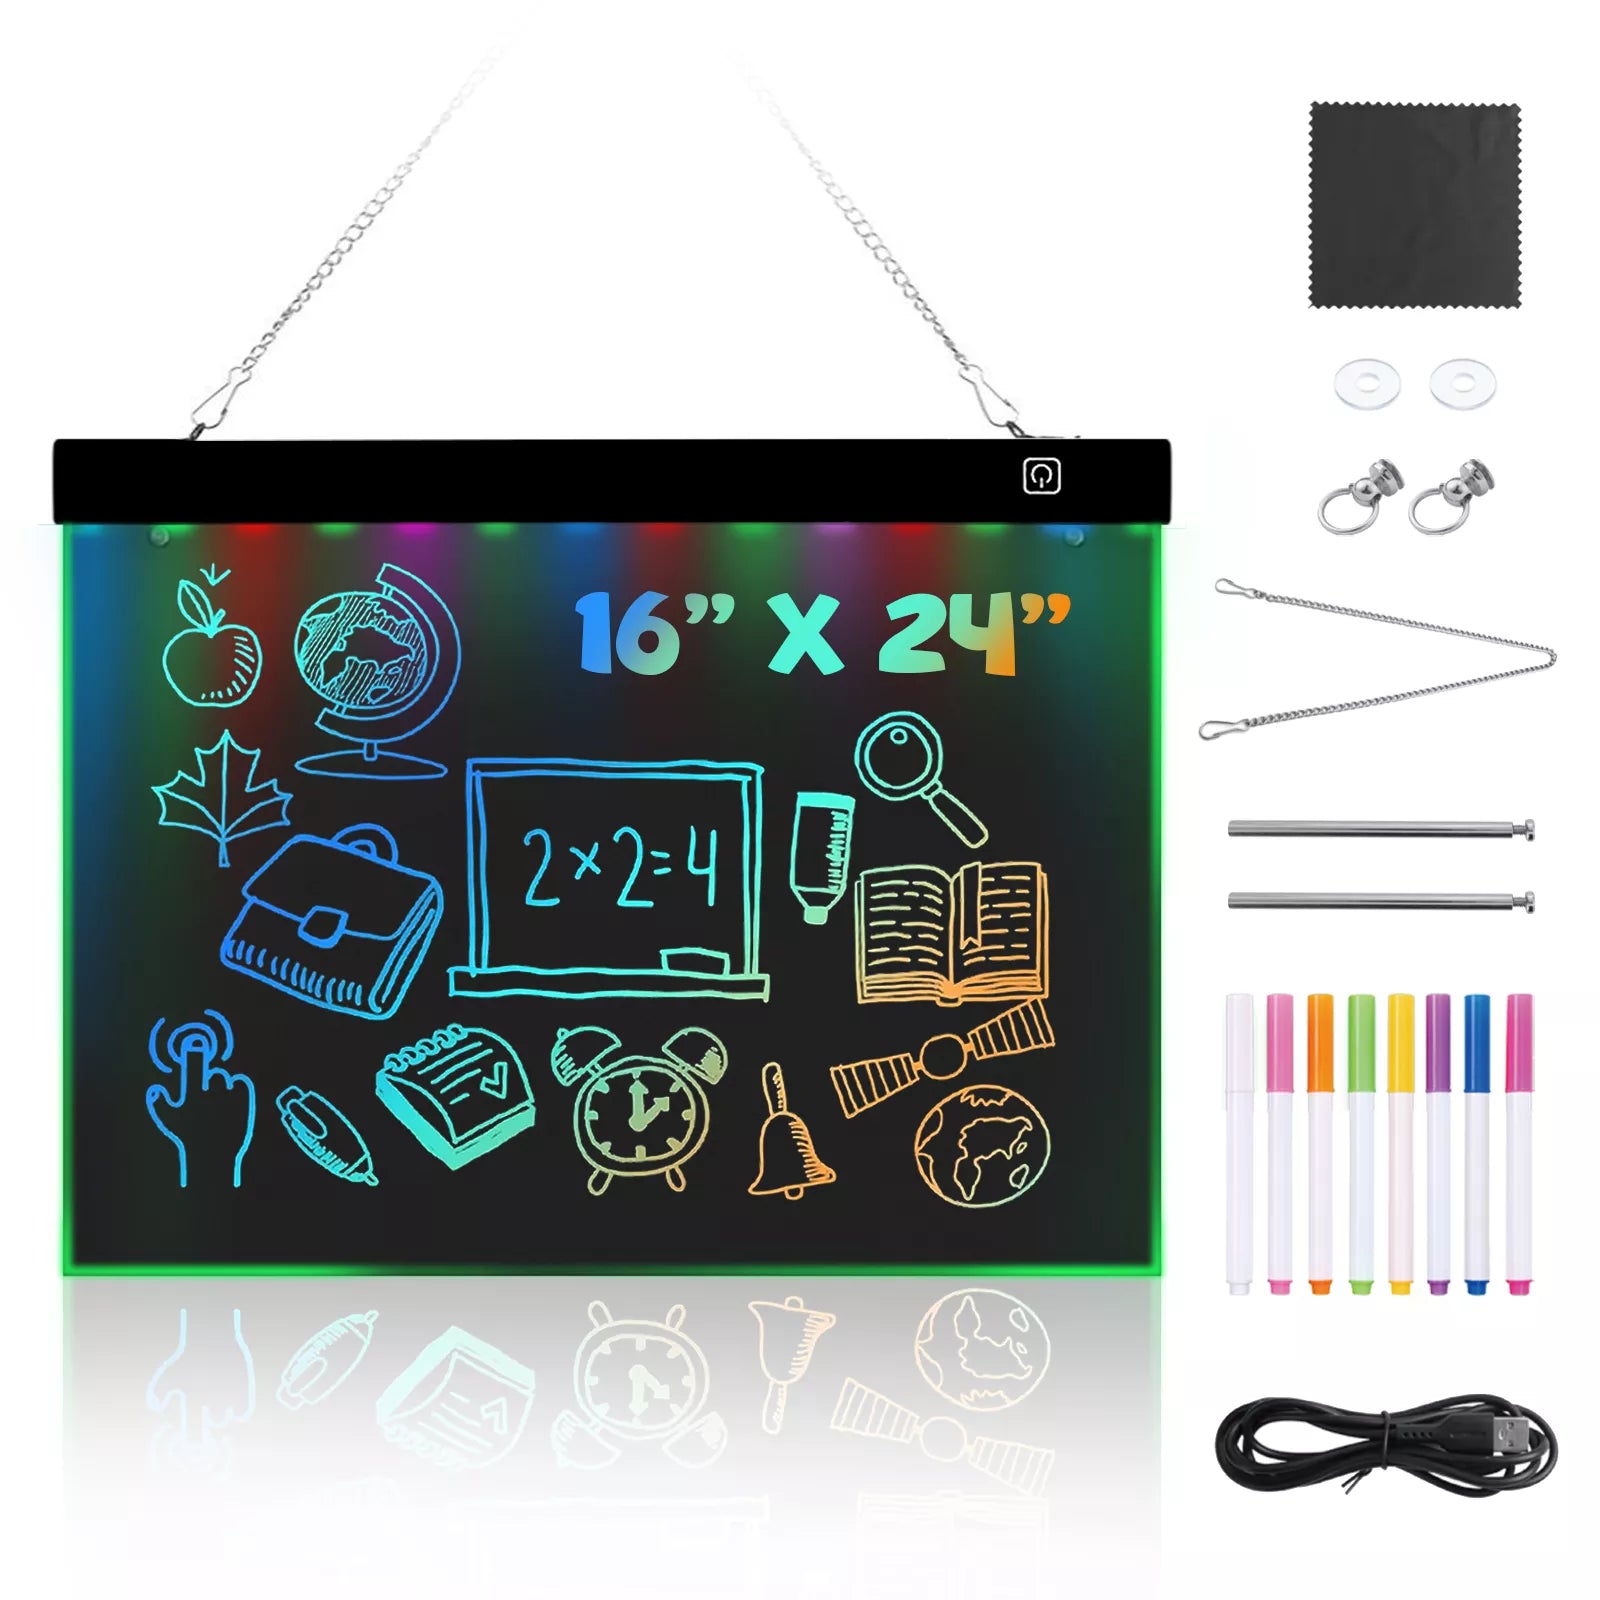 LED Display Board Kit 16